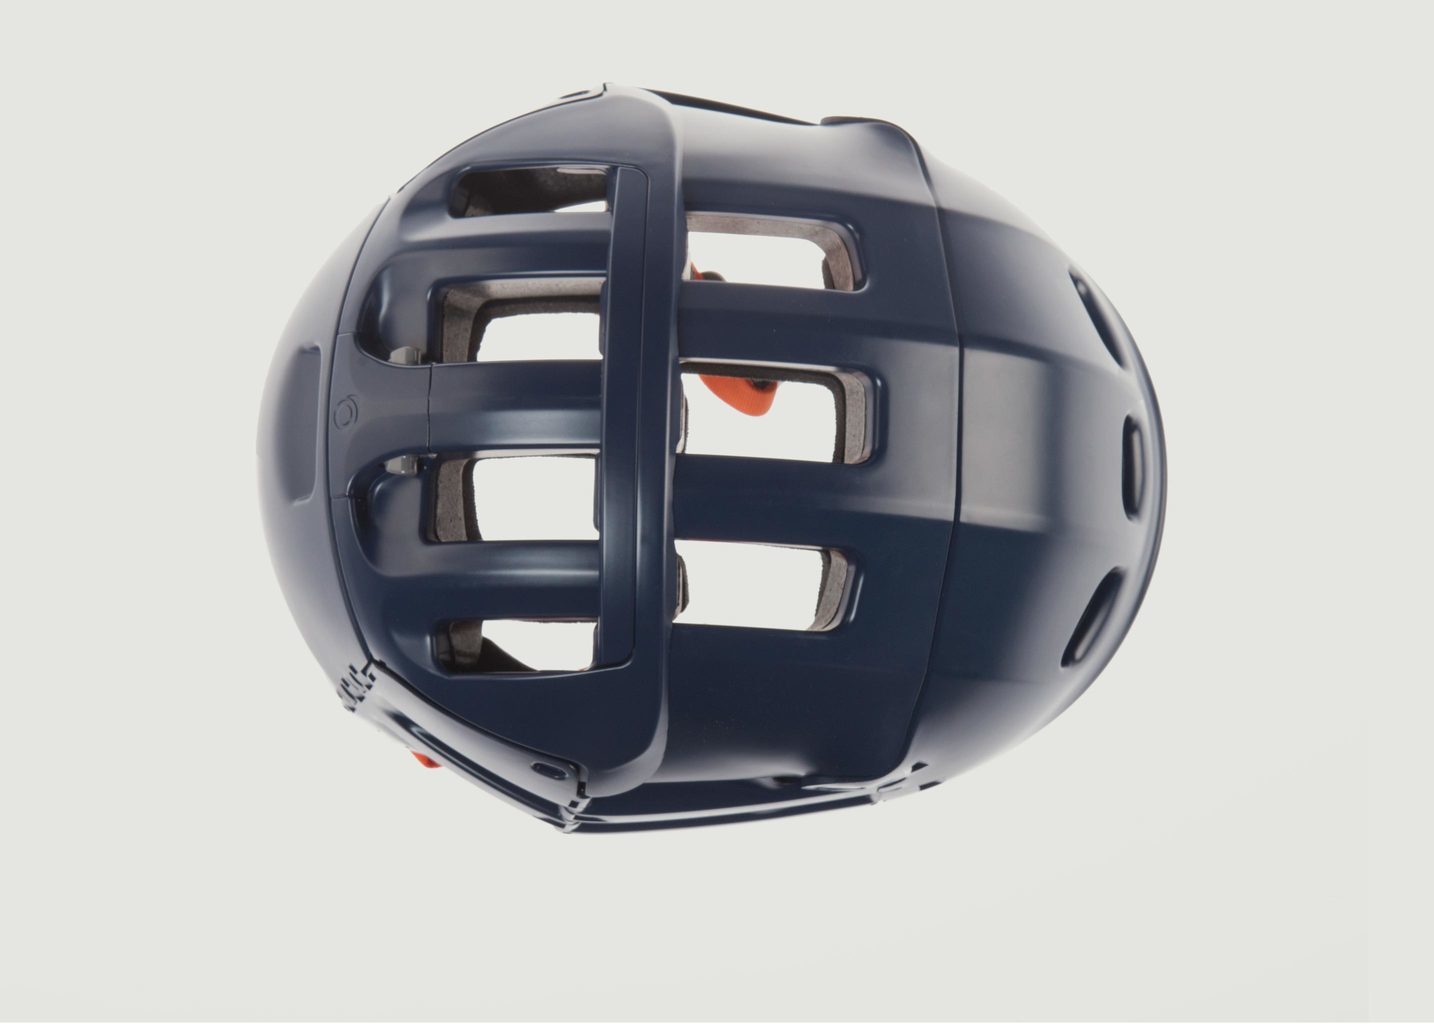 Plixi Fit Foldable Helmet  - Overade